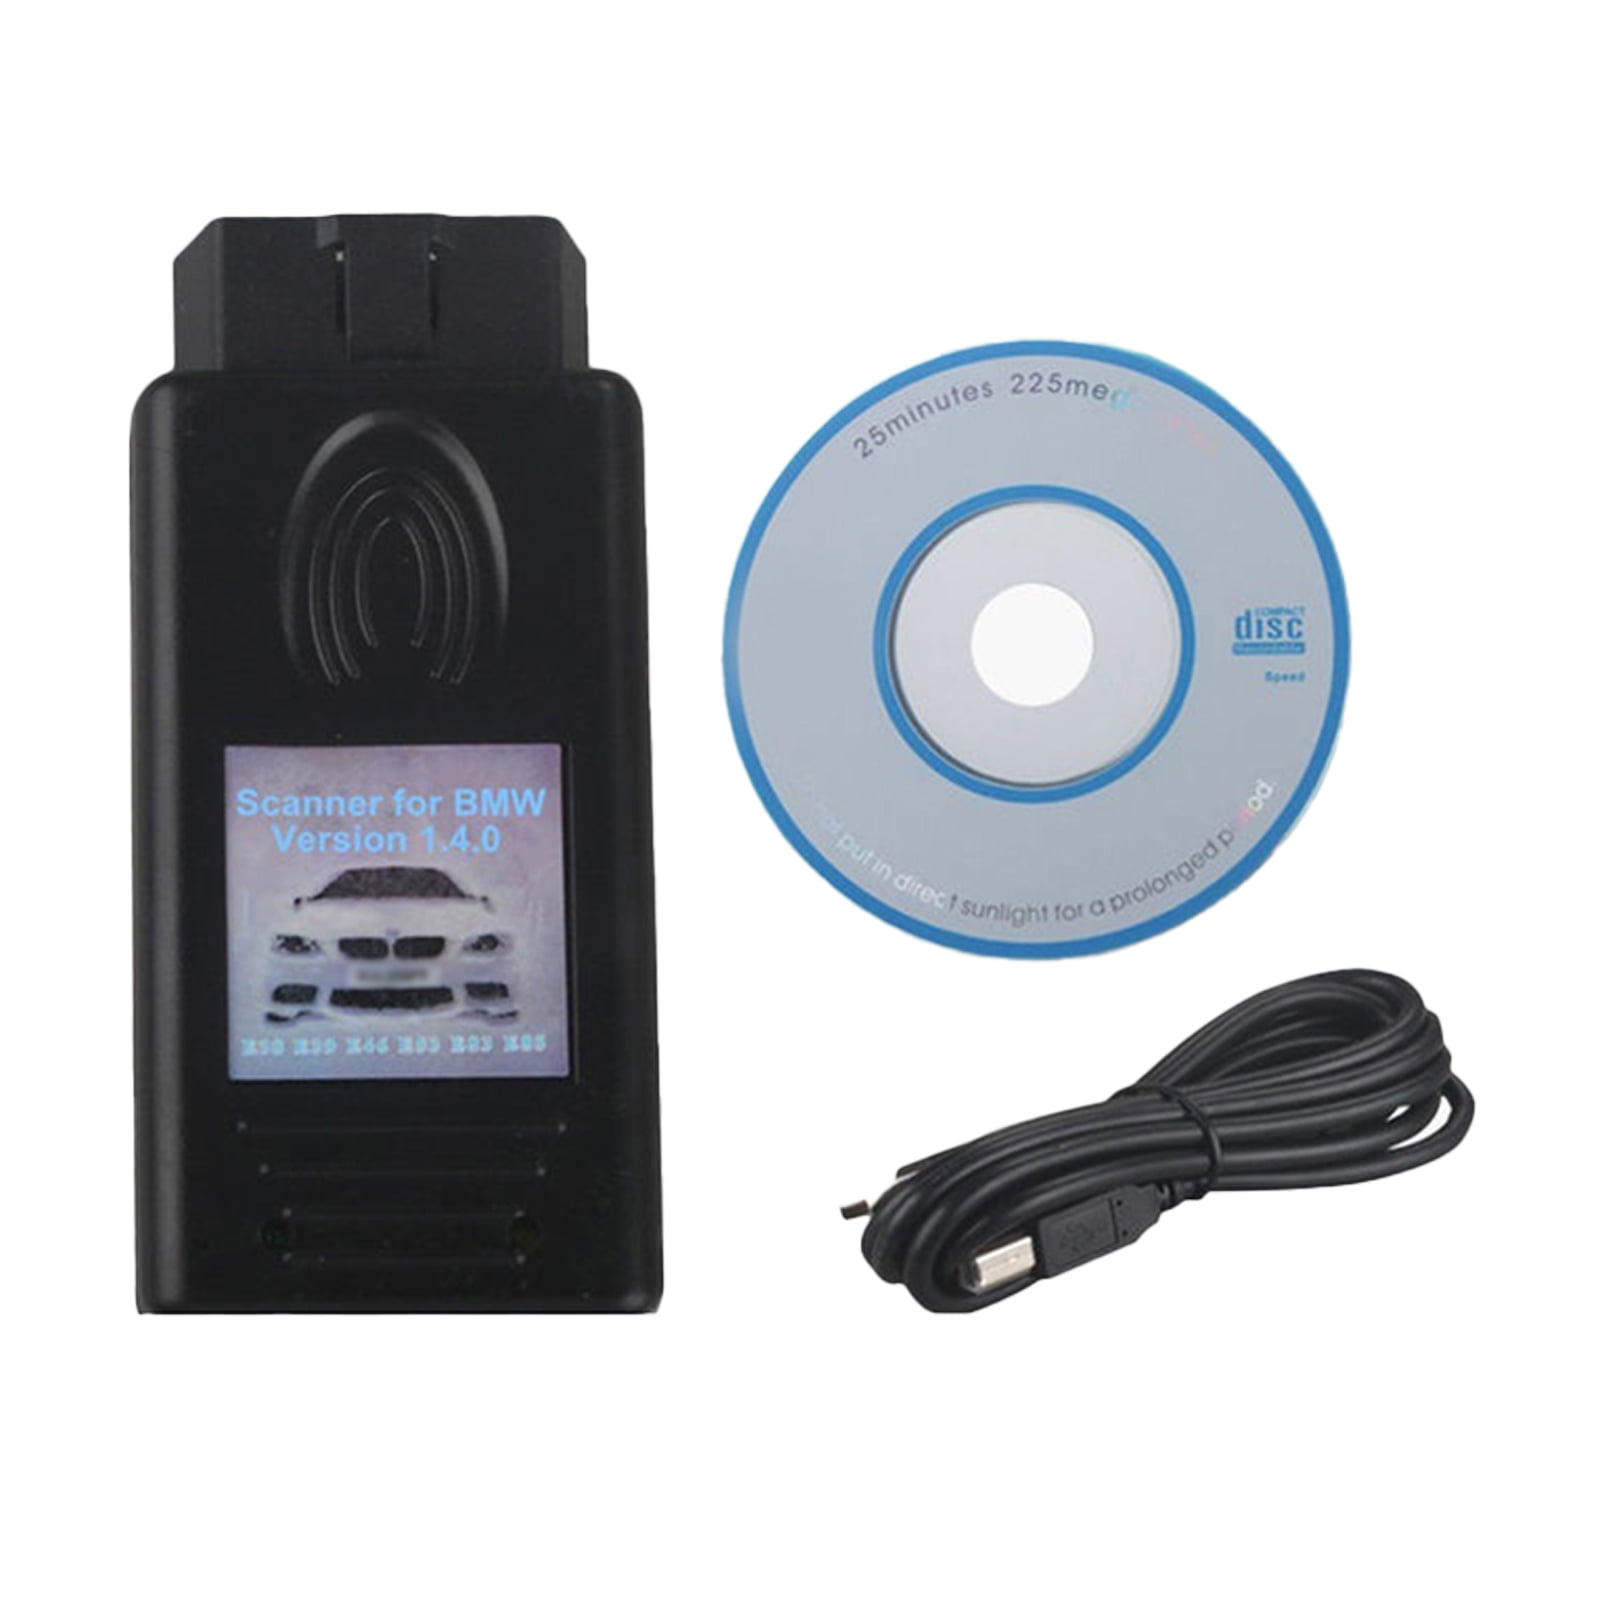 interjunzhan Useful Diagnostic Never Locking 1.4.0 Version Auto Scanner Tool Replacement for BMW E38 E39 E46 1set 